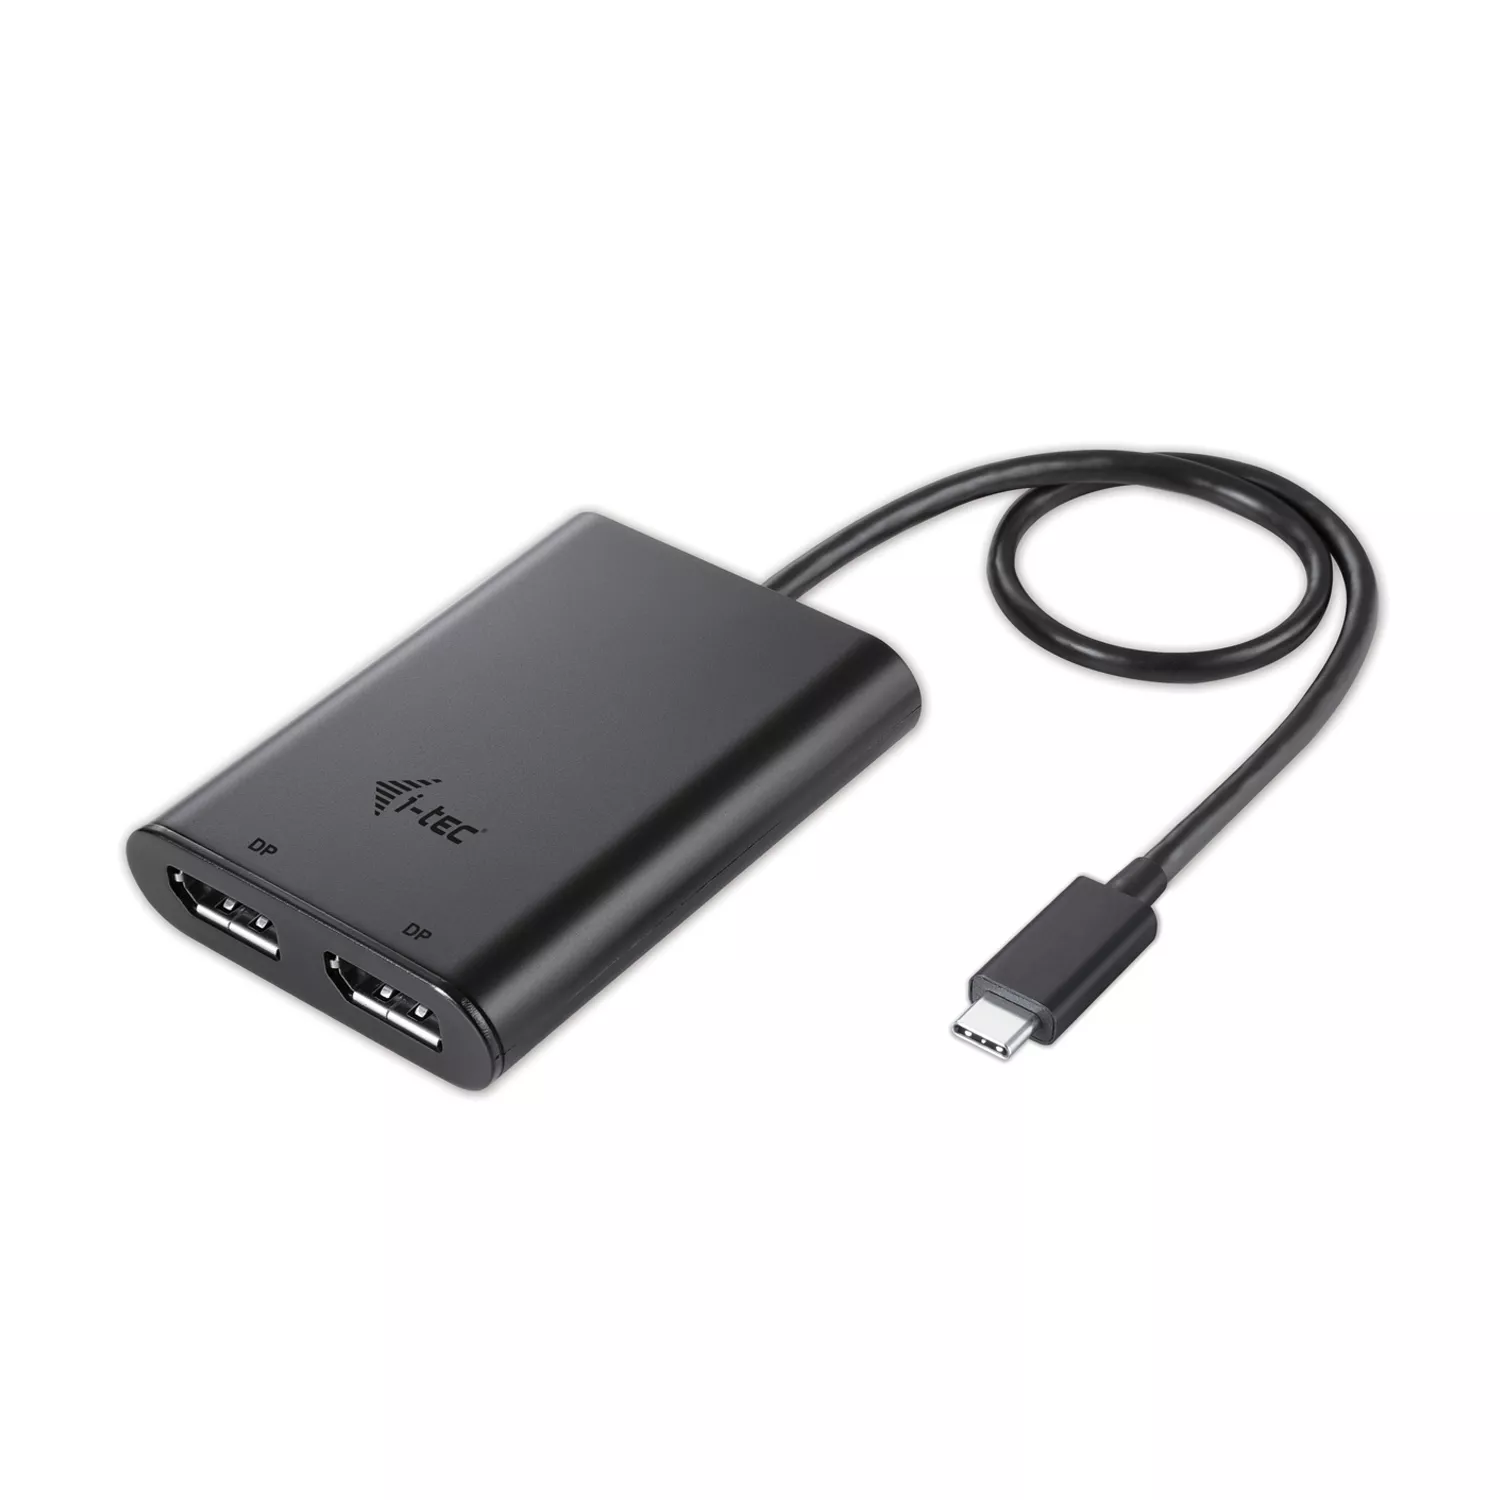 Revendeur officiel Station d'accueil pour portable I-TEC USB C to Dual DisplayPort VideoAdapter 2xDisplayPort